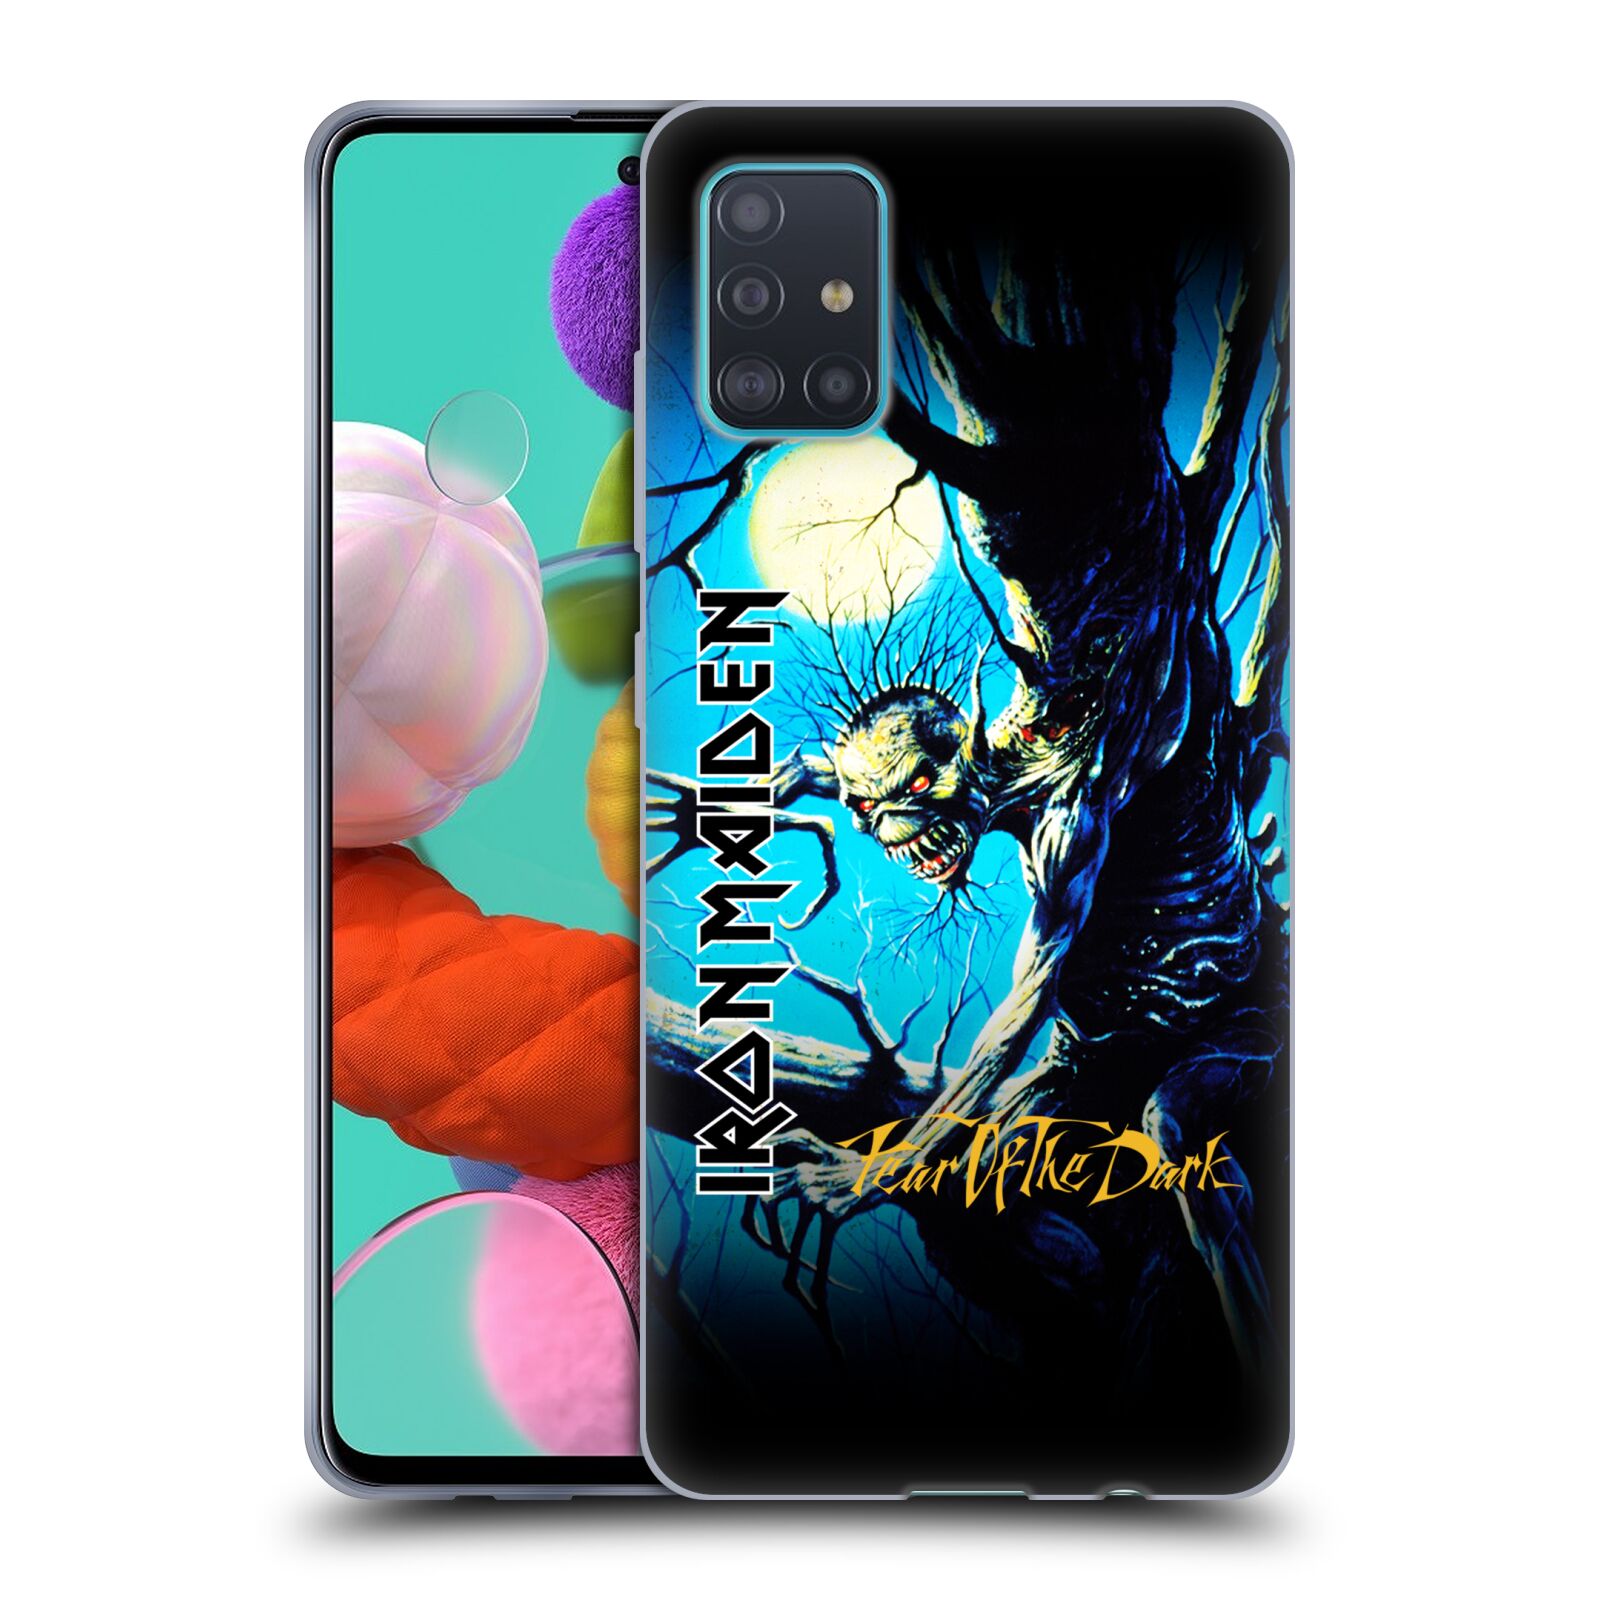 Silikonové pouzdro na mobil Samsung Galaxy A51 - Head Case - Iron Maiden - Fear Of The Dark (Silikonový kryt, obal, pouzdro na mobilní telefon Samsung Galaxy A51 A515F Dual SIM s motivem Iron Maiden - Fear Of The Dark)